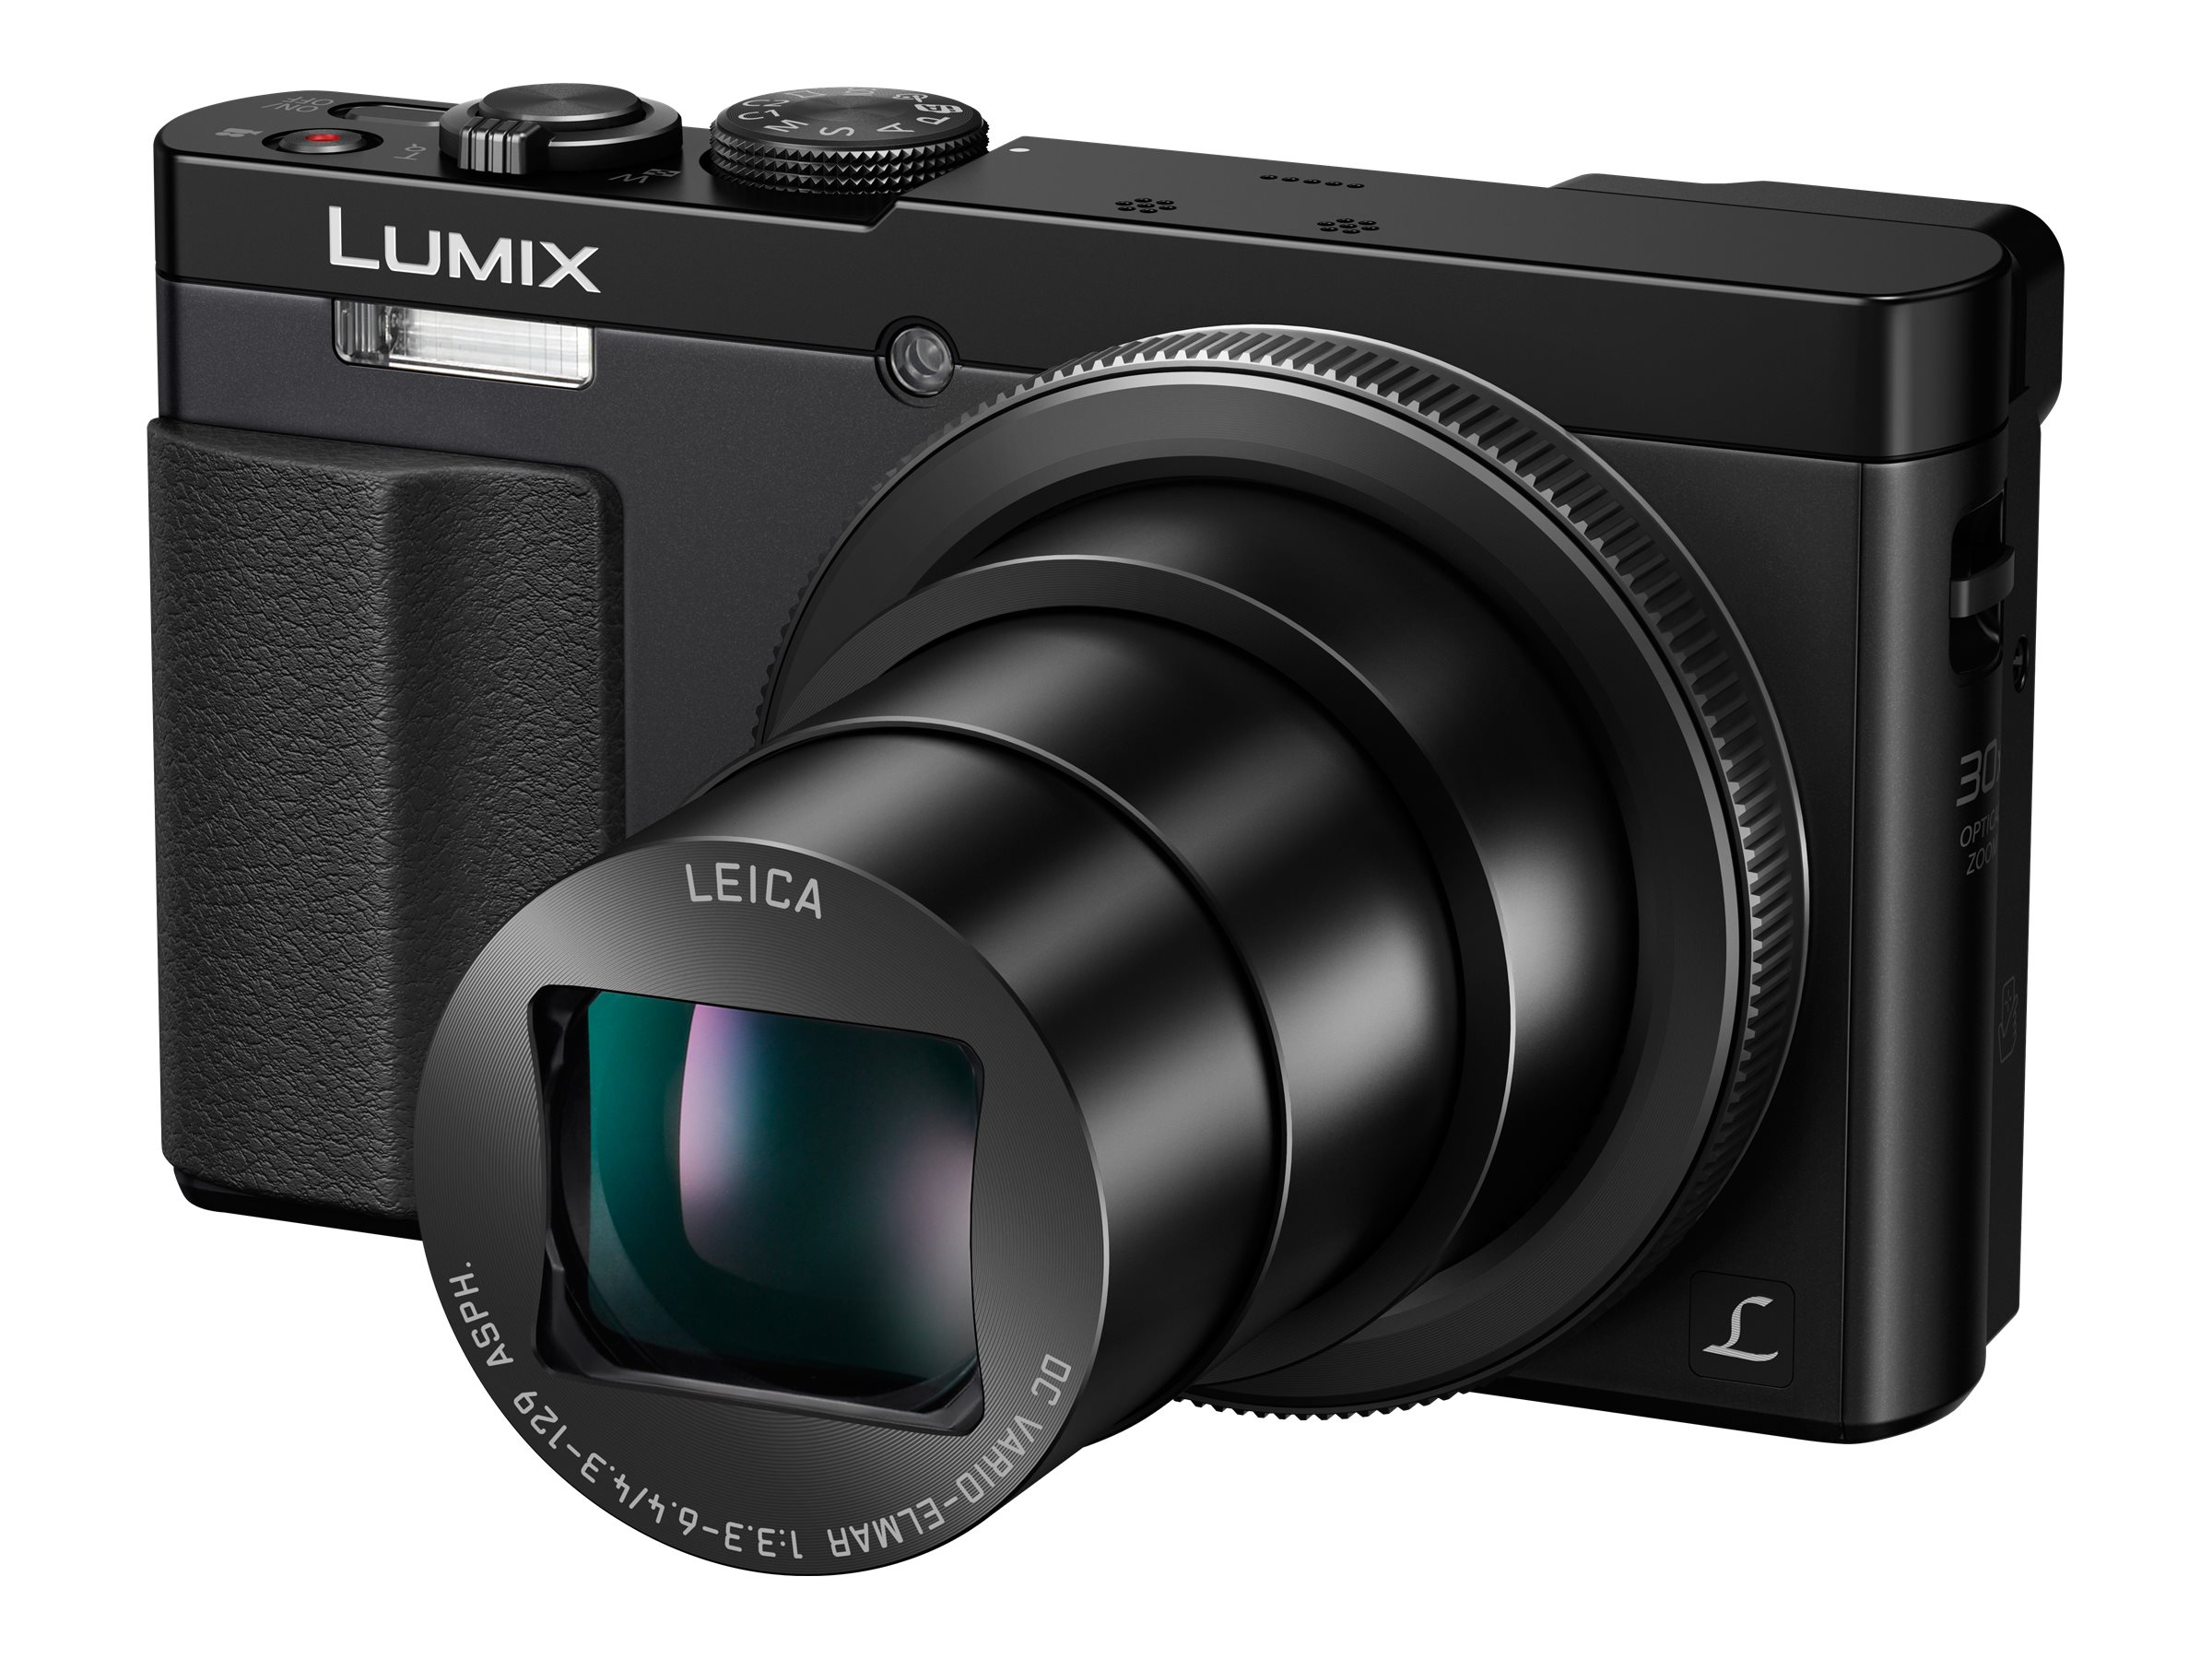 Panasonic Lumix DMC-ZS50 - Digital camera - compact - 12.1 MP - 1080p - 30x optical zoom - Leica - Wi-Fi, NFC - black - image 3 of 10